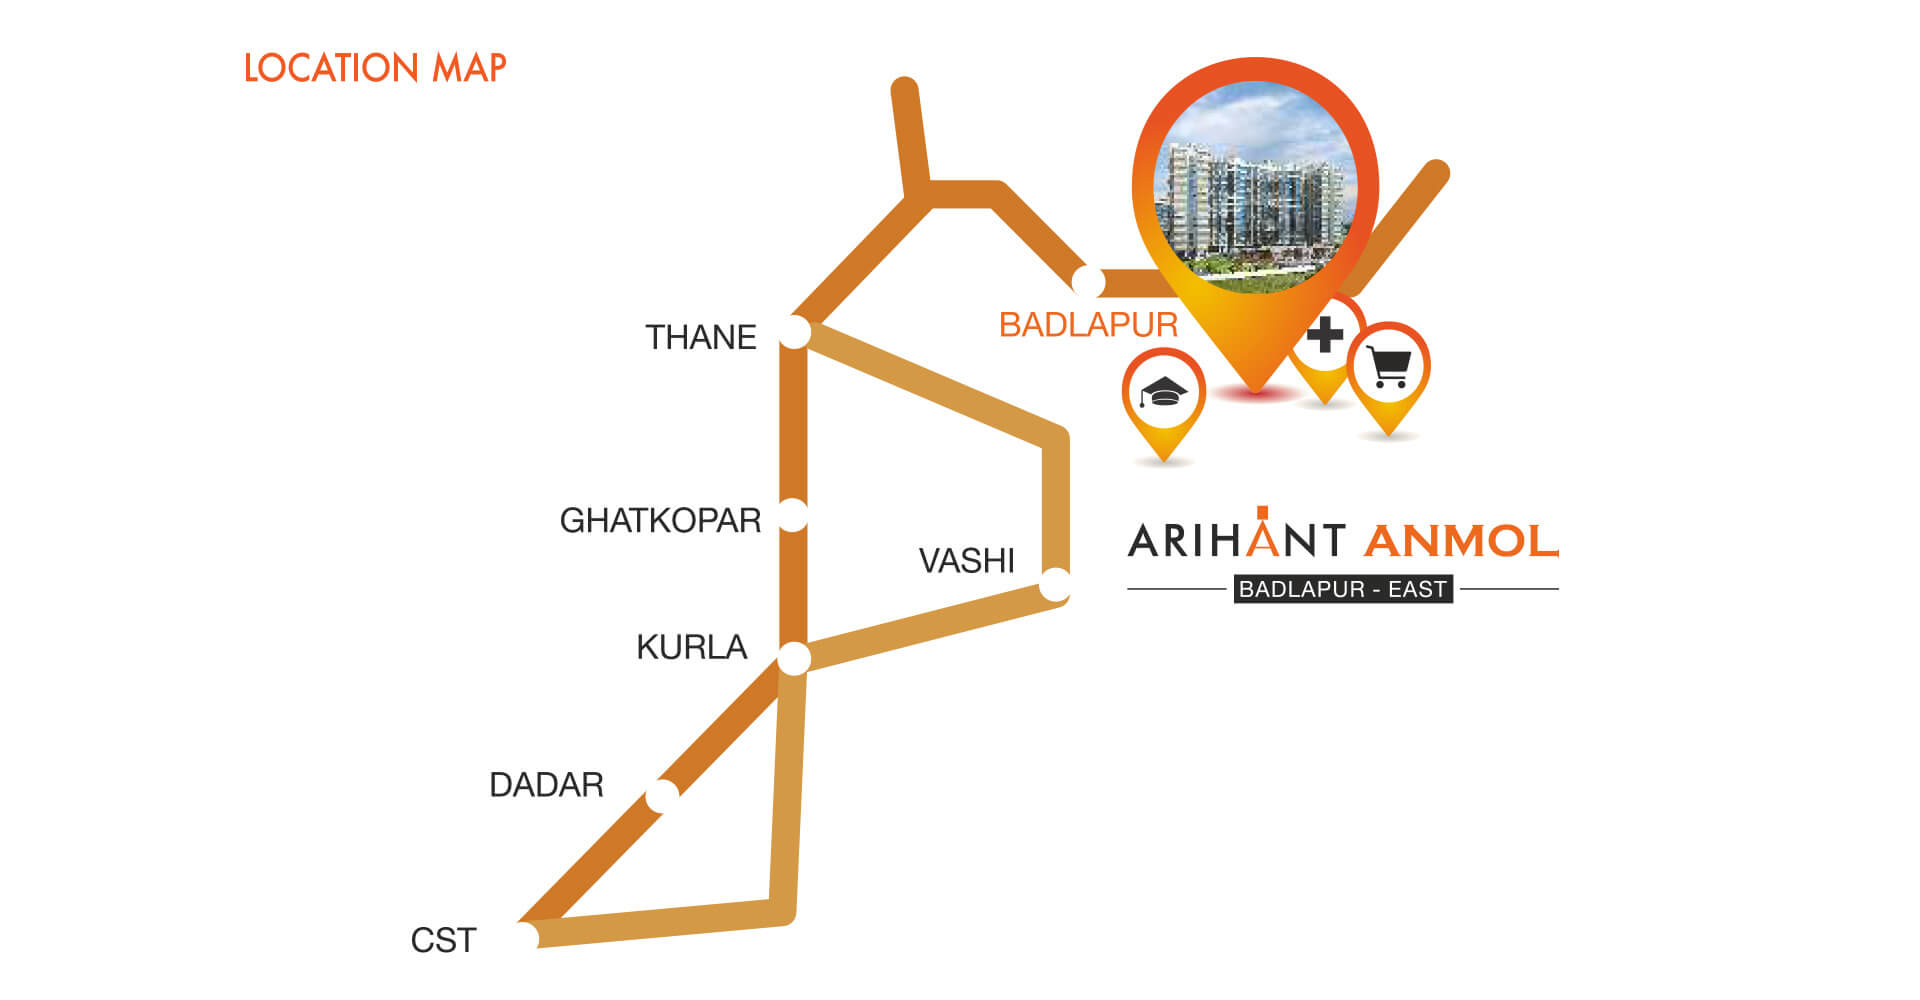 Arihant Anmol Location Map